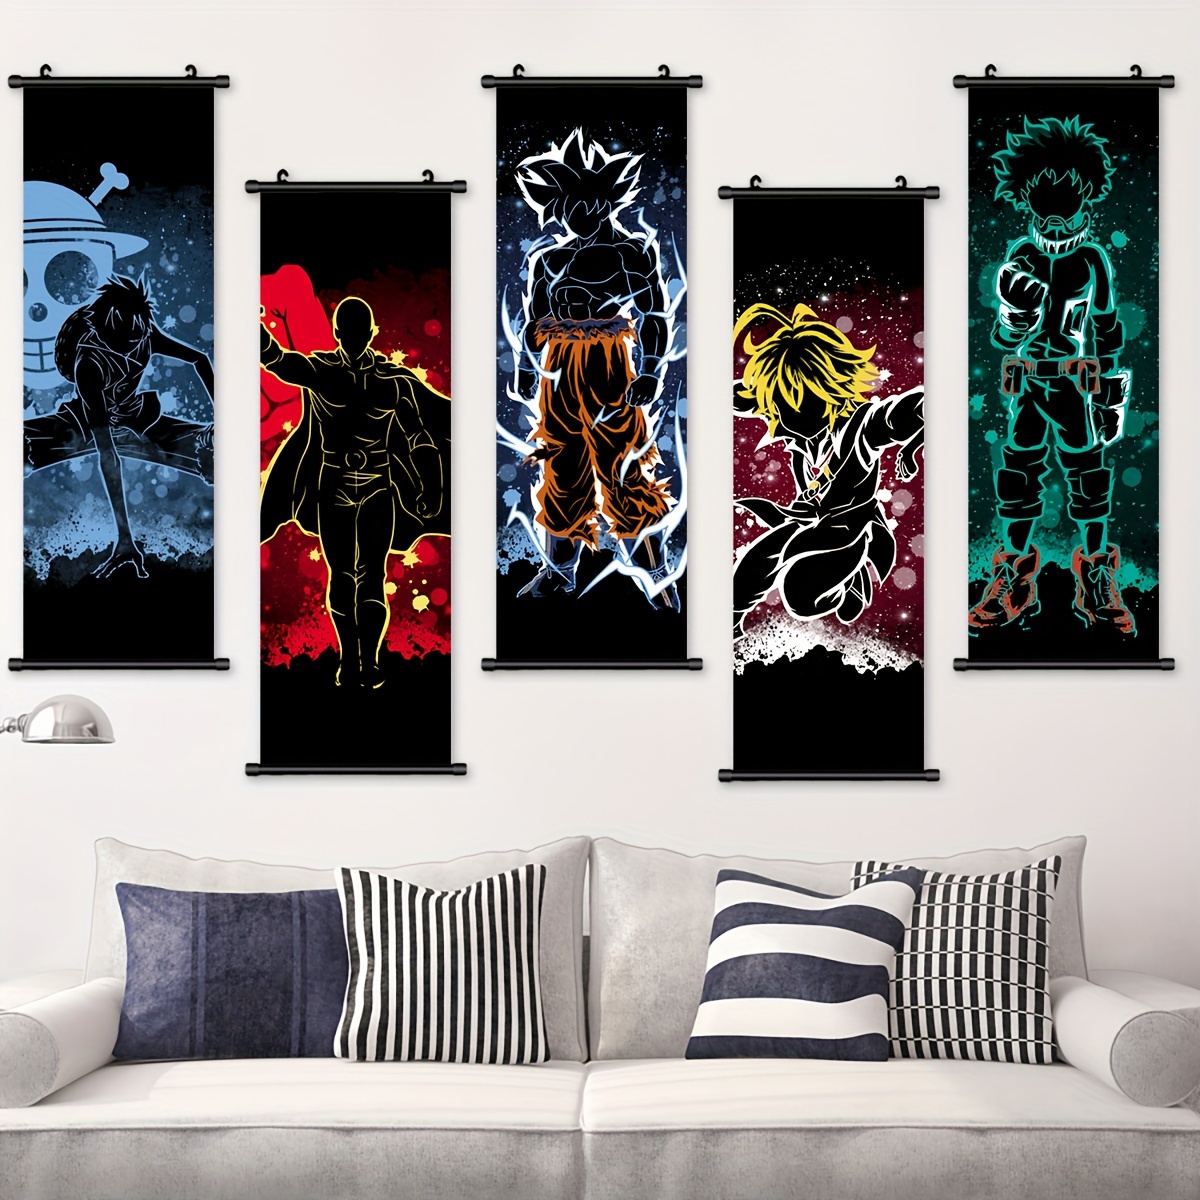 Demon Slayer Season 2 Anime Canvas Poster Wall Art Decor Picture